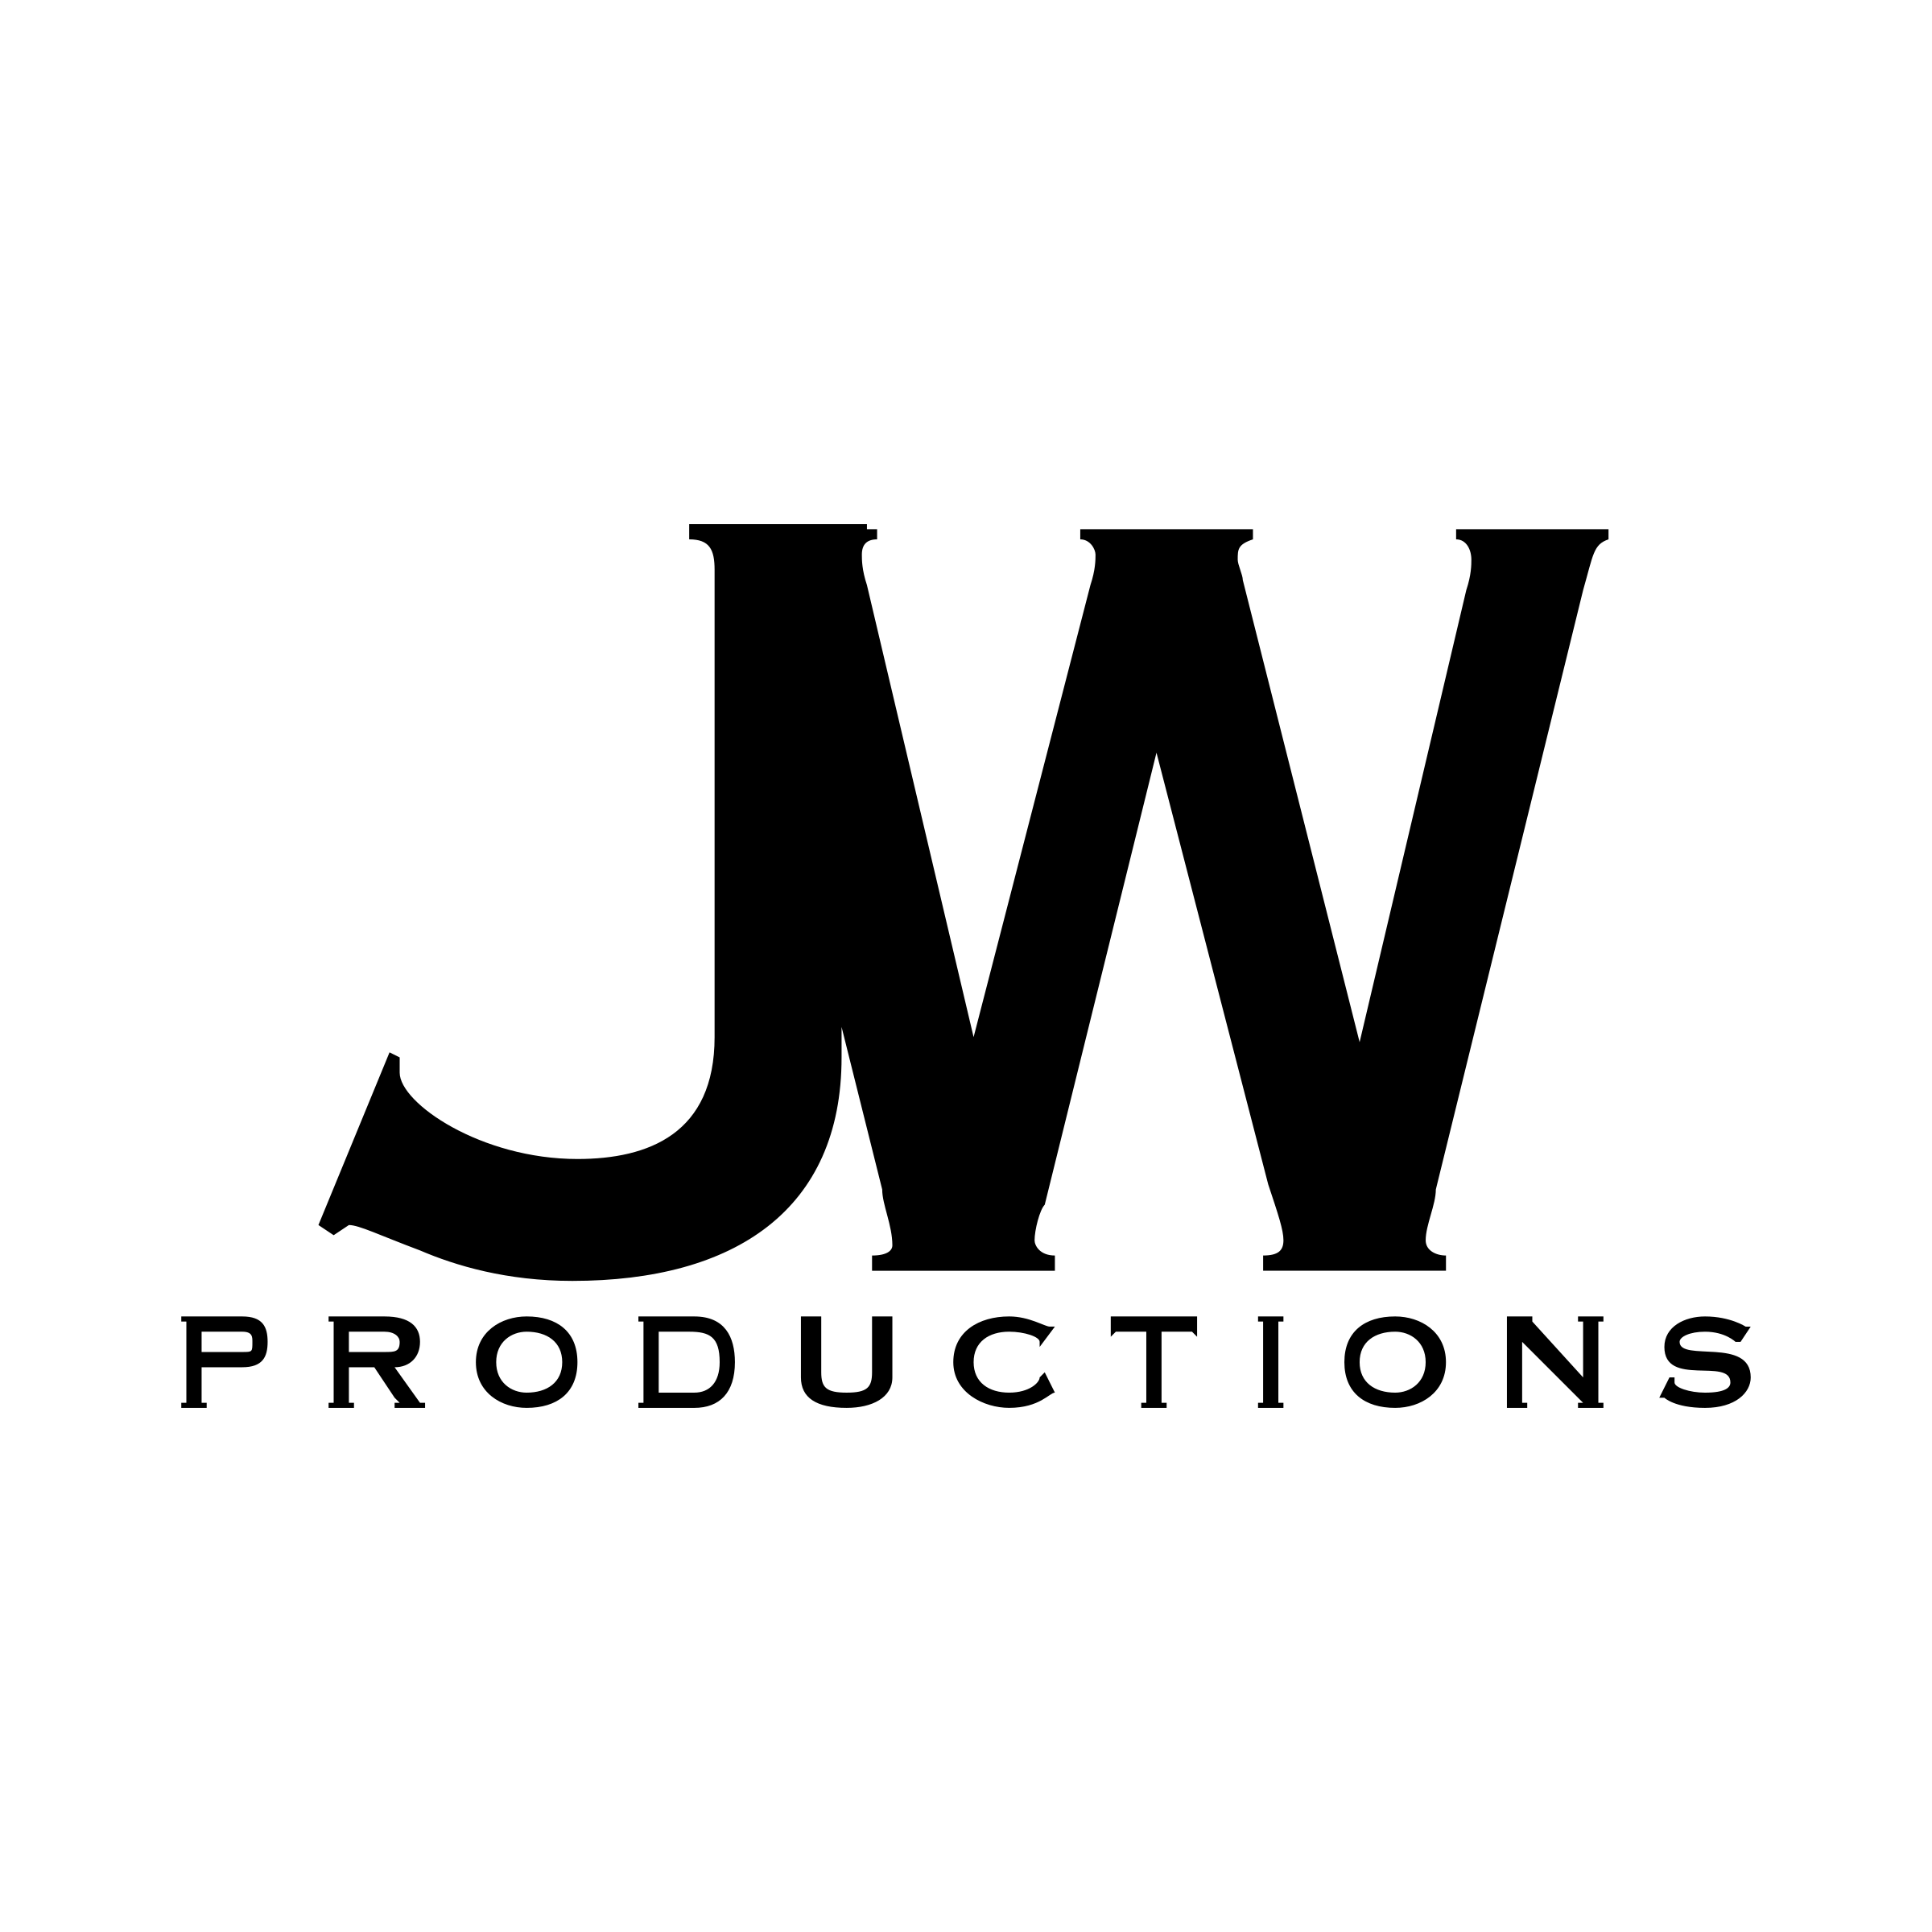 JW Logo - JW Productions Logo PNG Transparent & SVG Vector